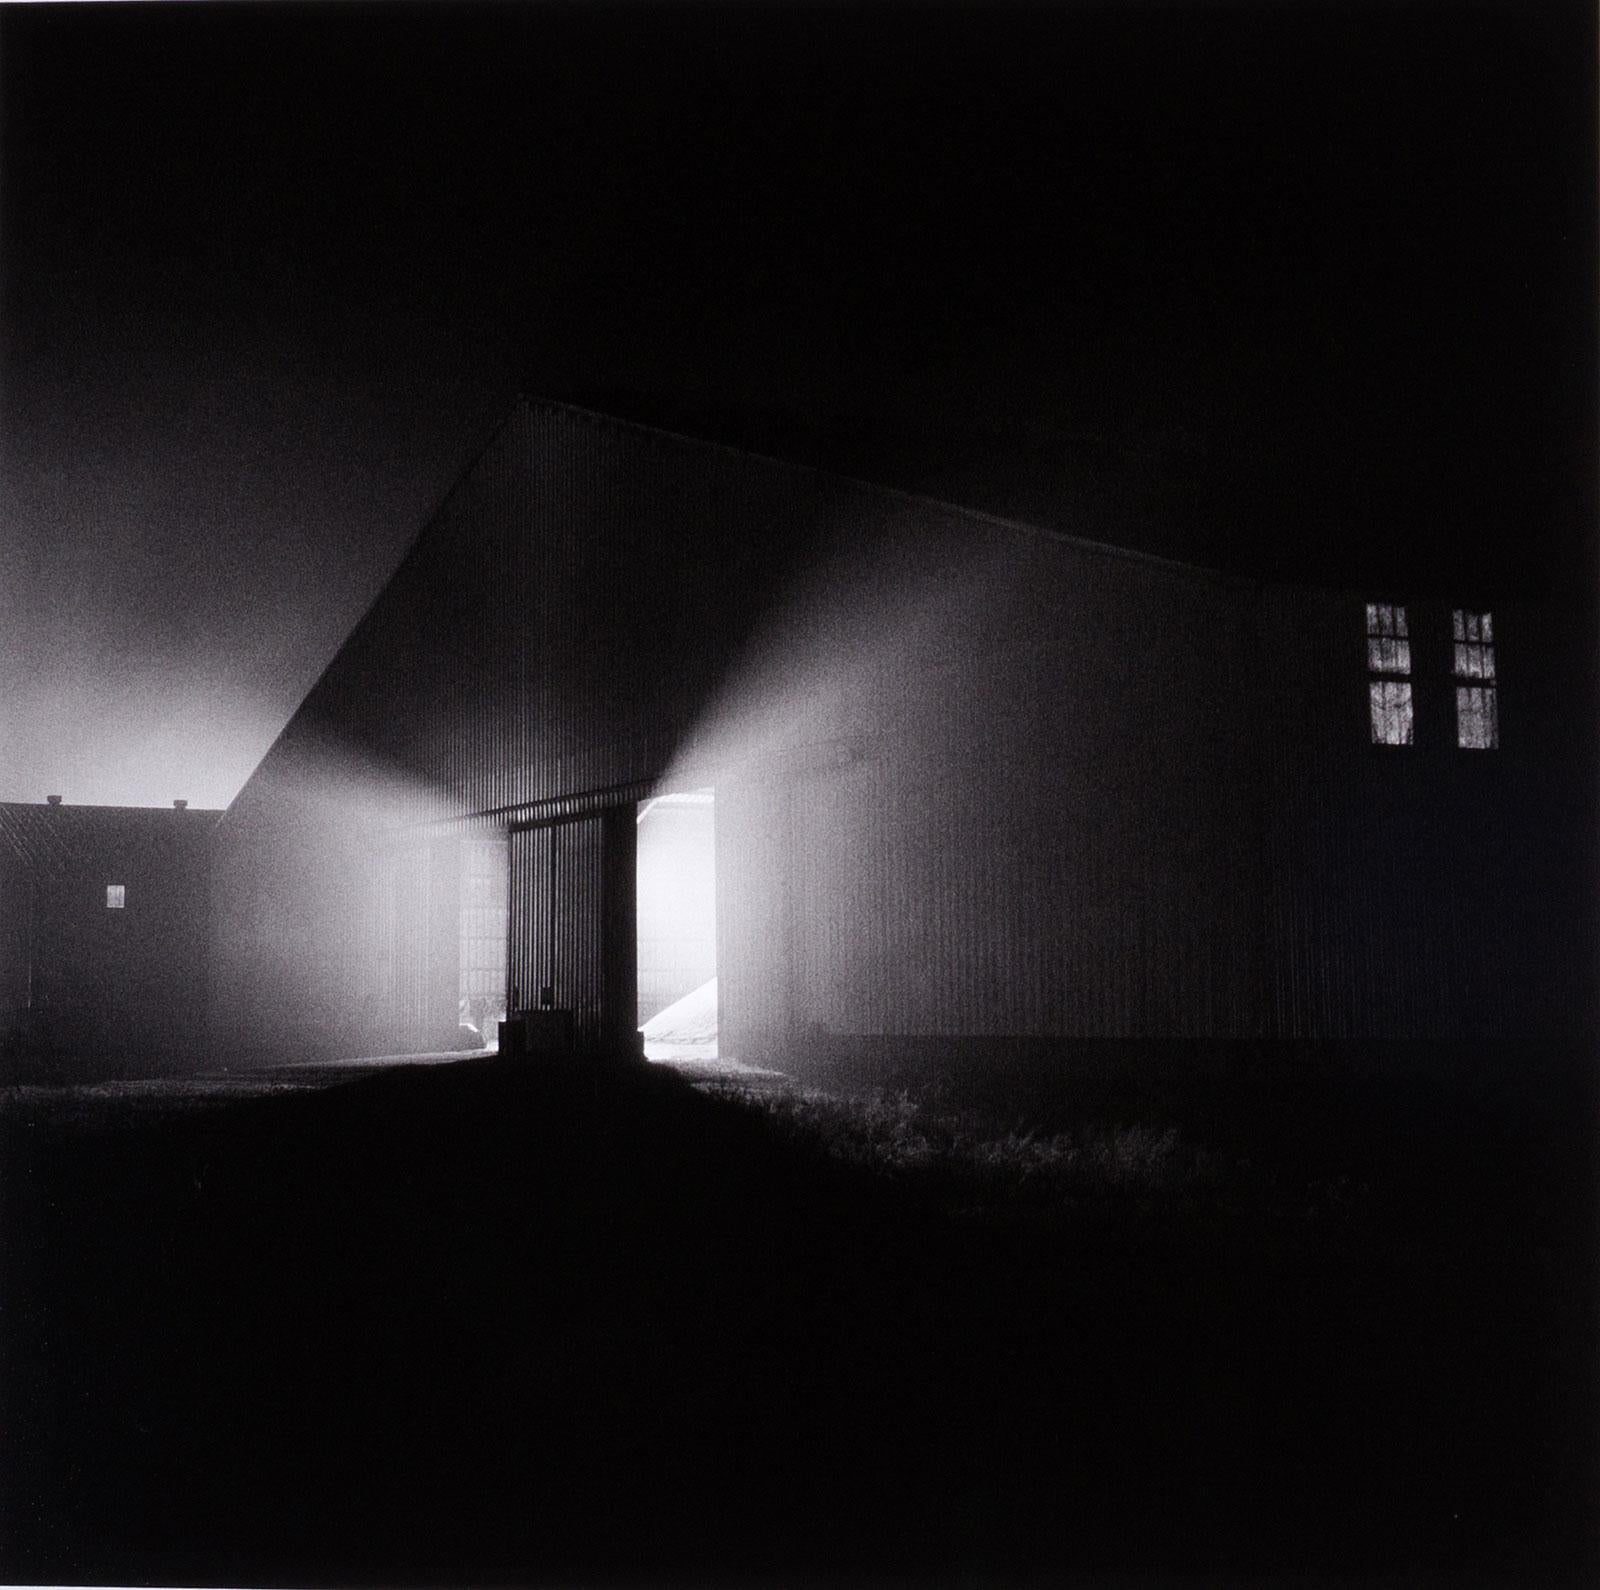 David Armentor Black and White Photograph - The Harvest Season (Louisiana Sugar Mill Series - New Iberia, Louisiana)